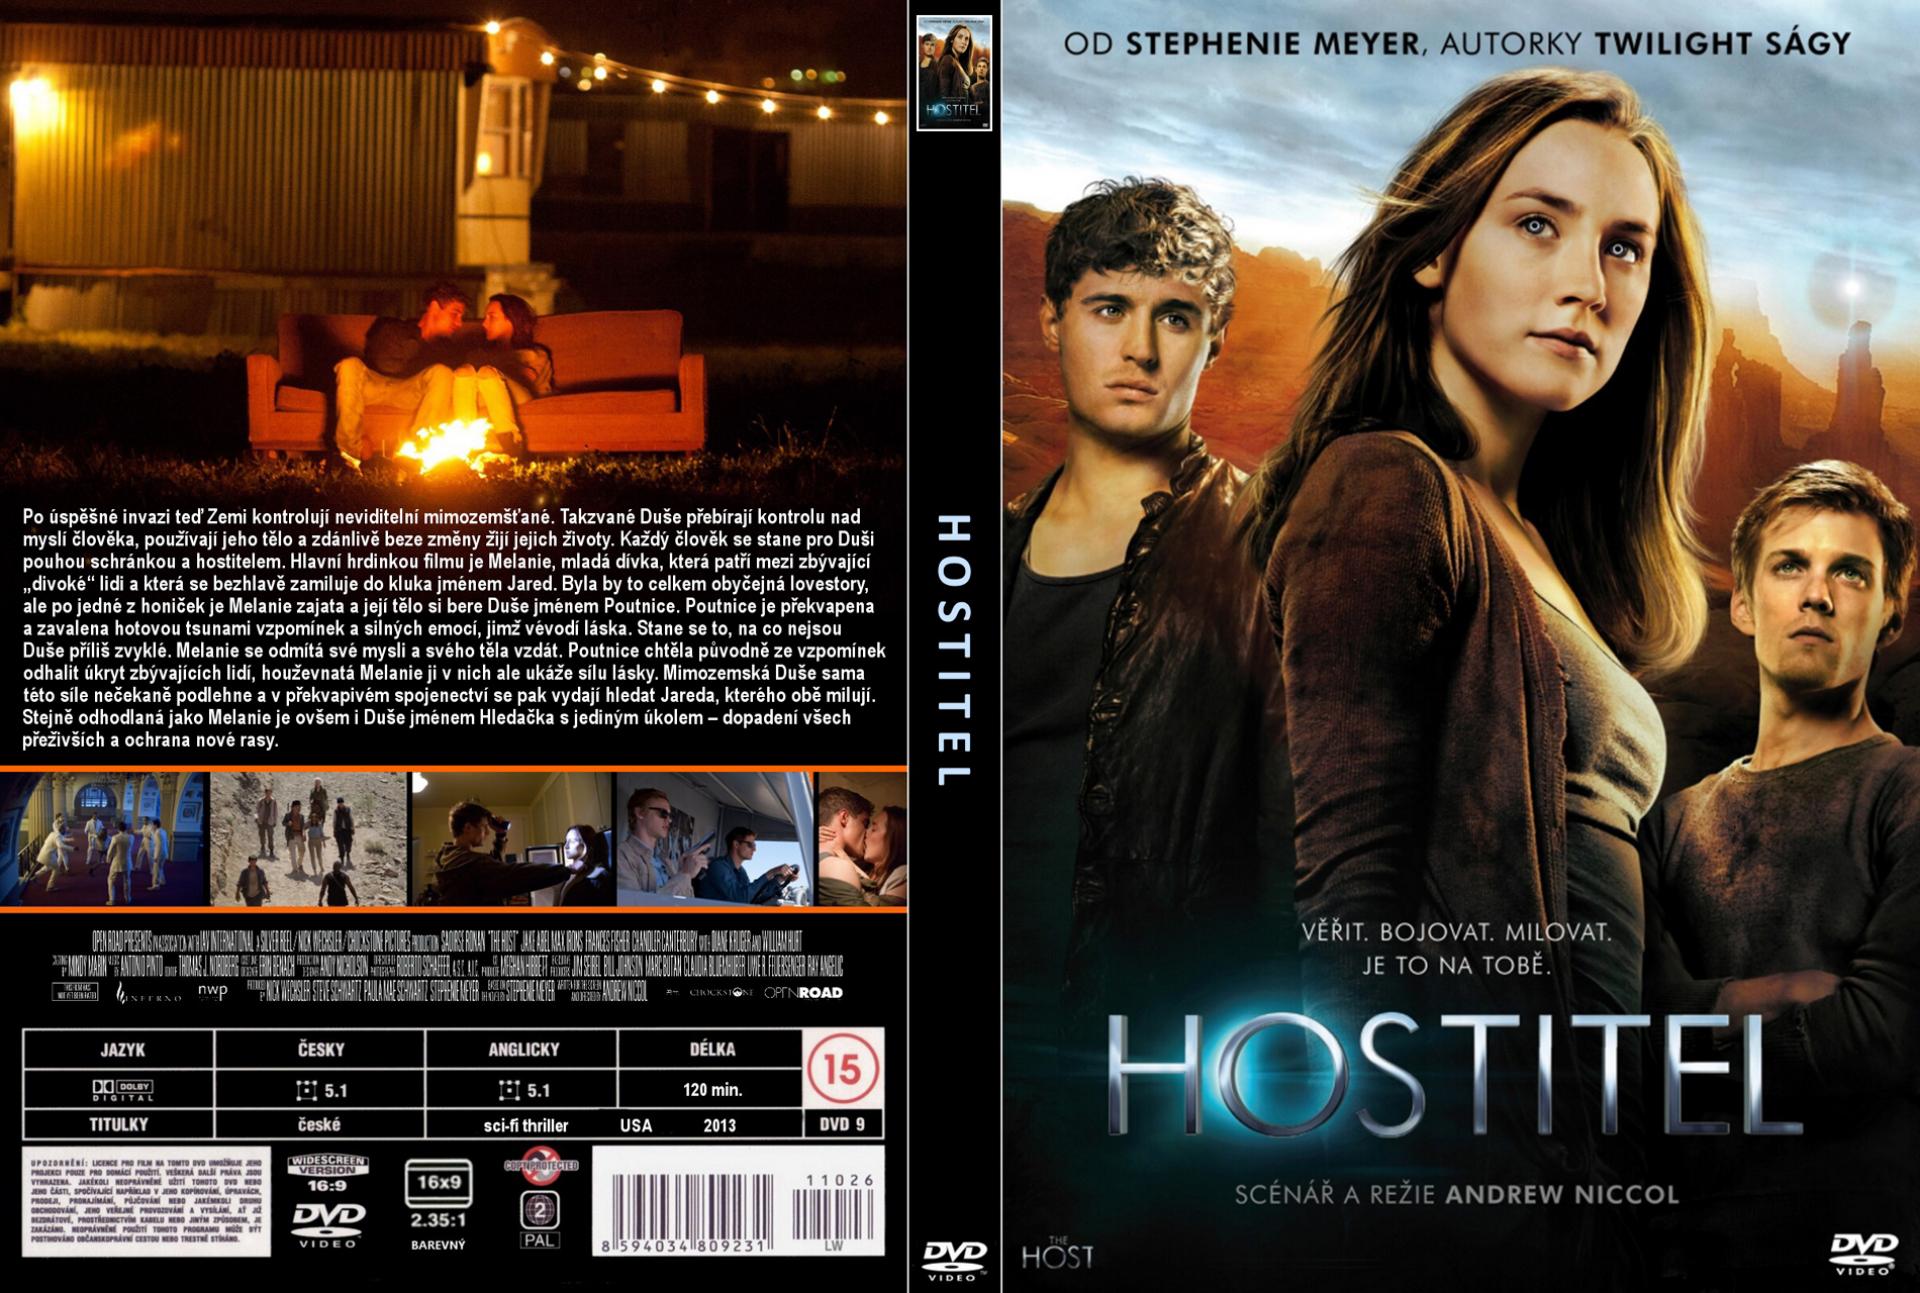 Stiahni si Filmy CZ/SK dabing Hostitel / The Host (2013)(CZ) = CSFD 58%